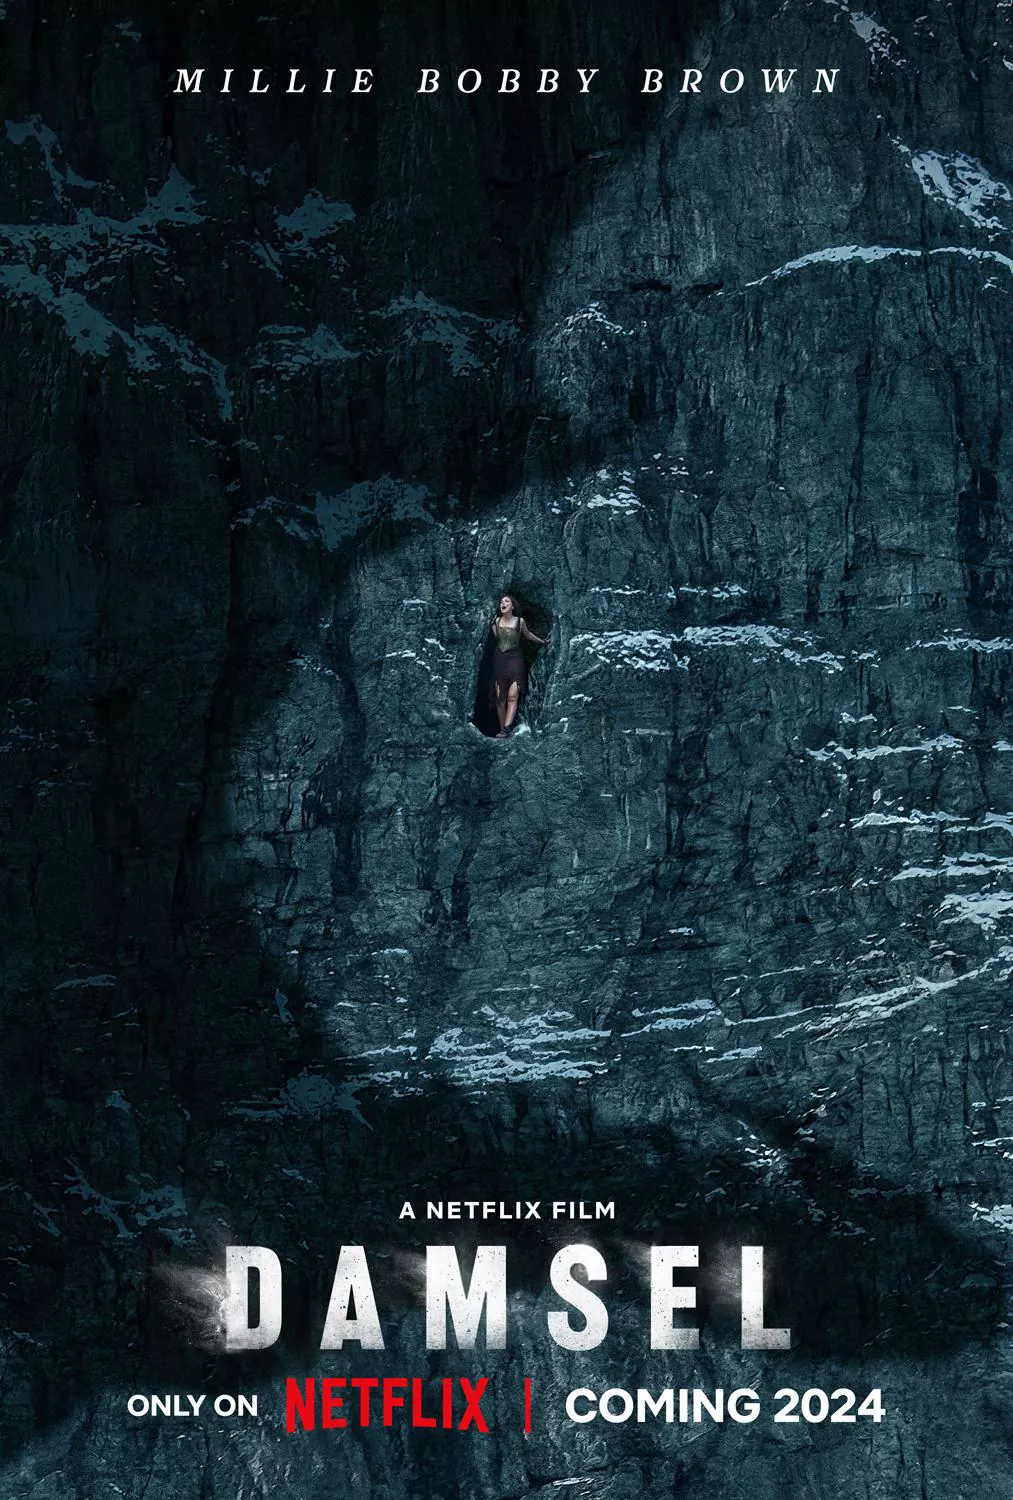 Trailer Από Το "Damsel" Του Netflix